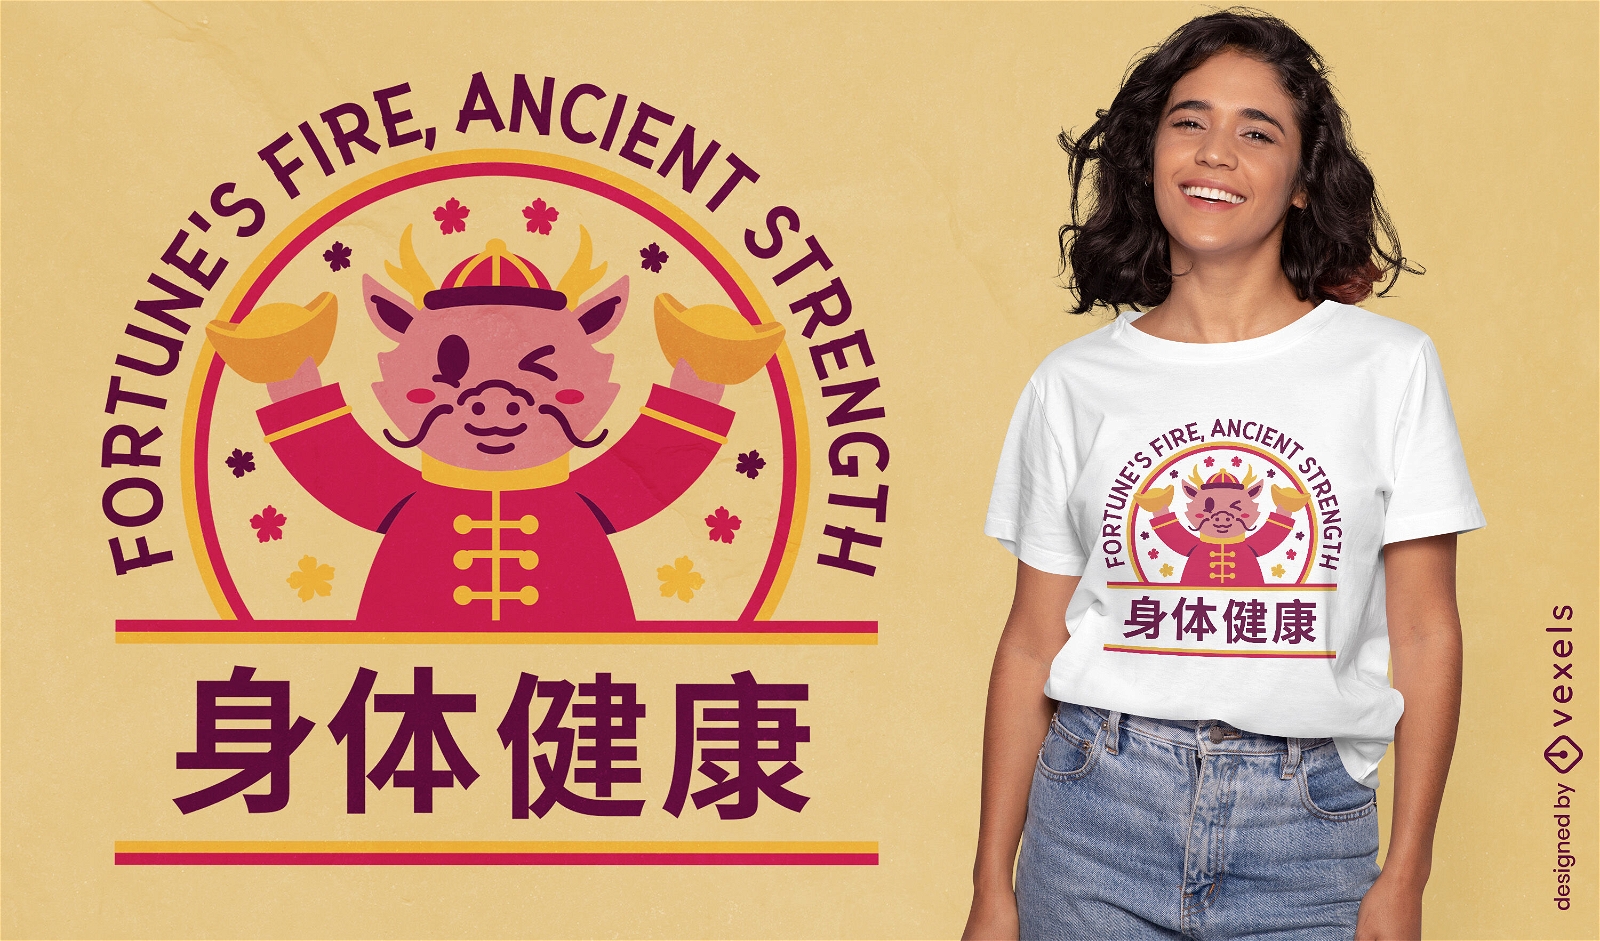 Fiery ancient fortunes t-shirt design